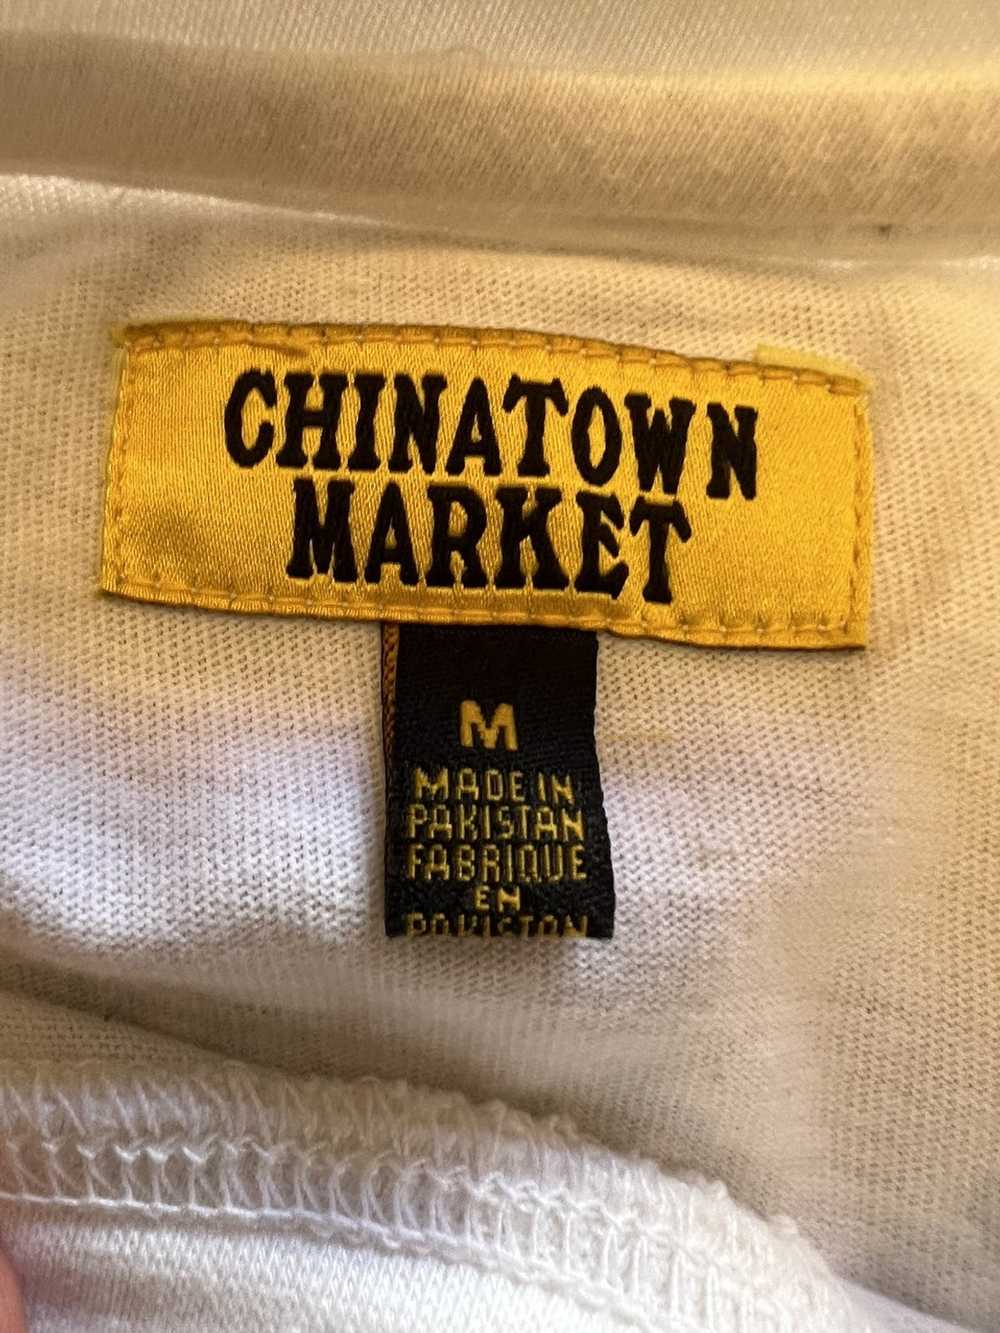 Market Chinatown market logo tee - image 3